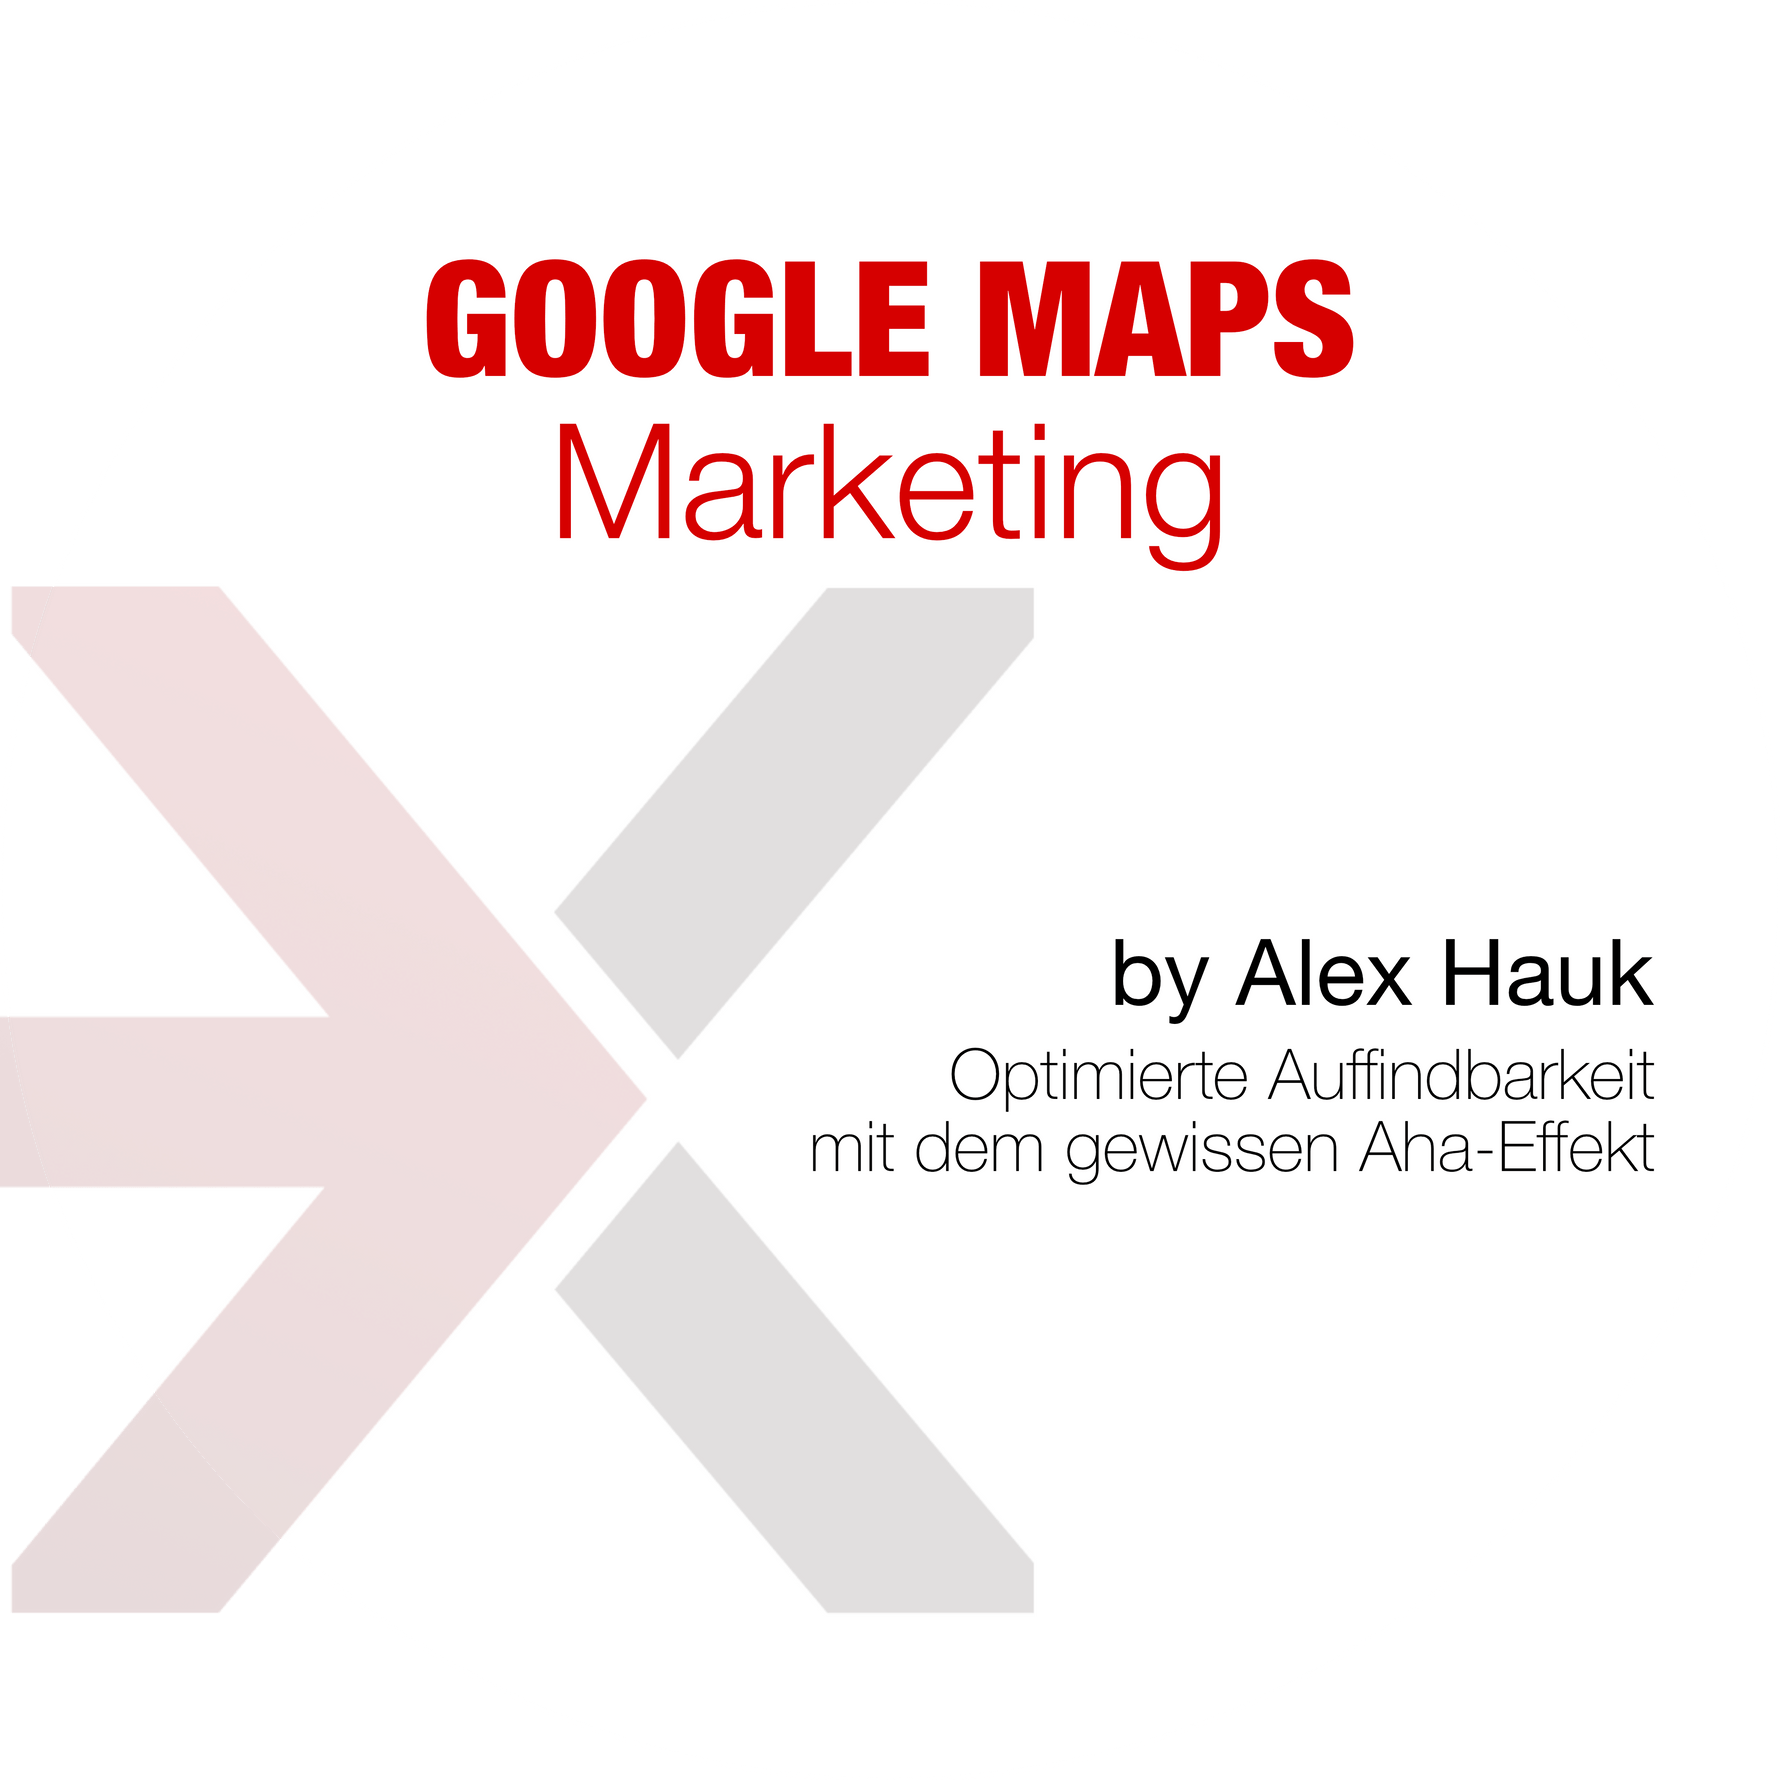 Google Maps Marketing by Alex Hauk